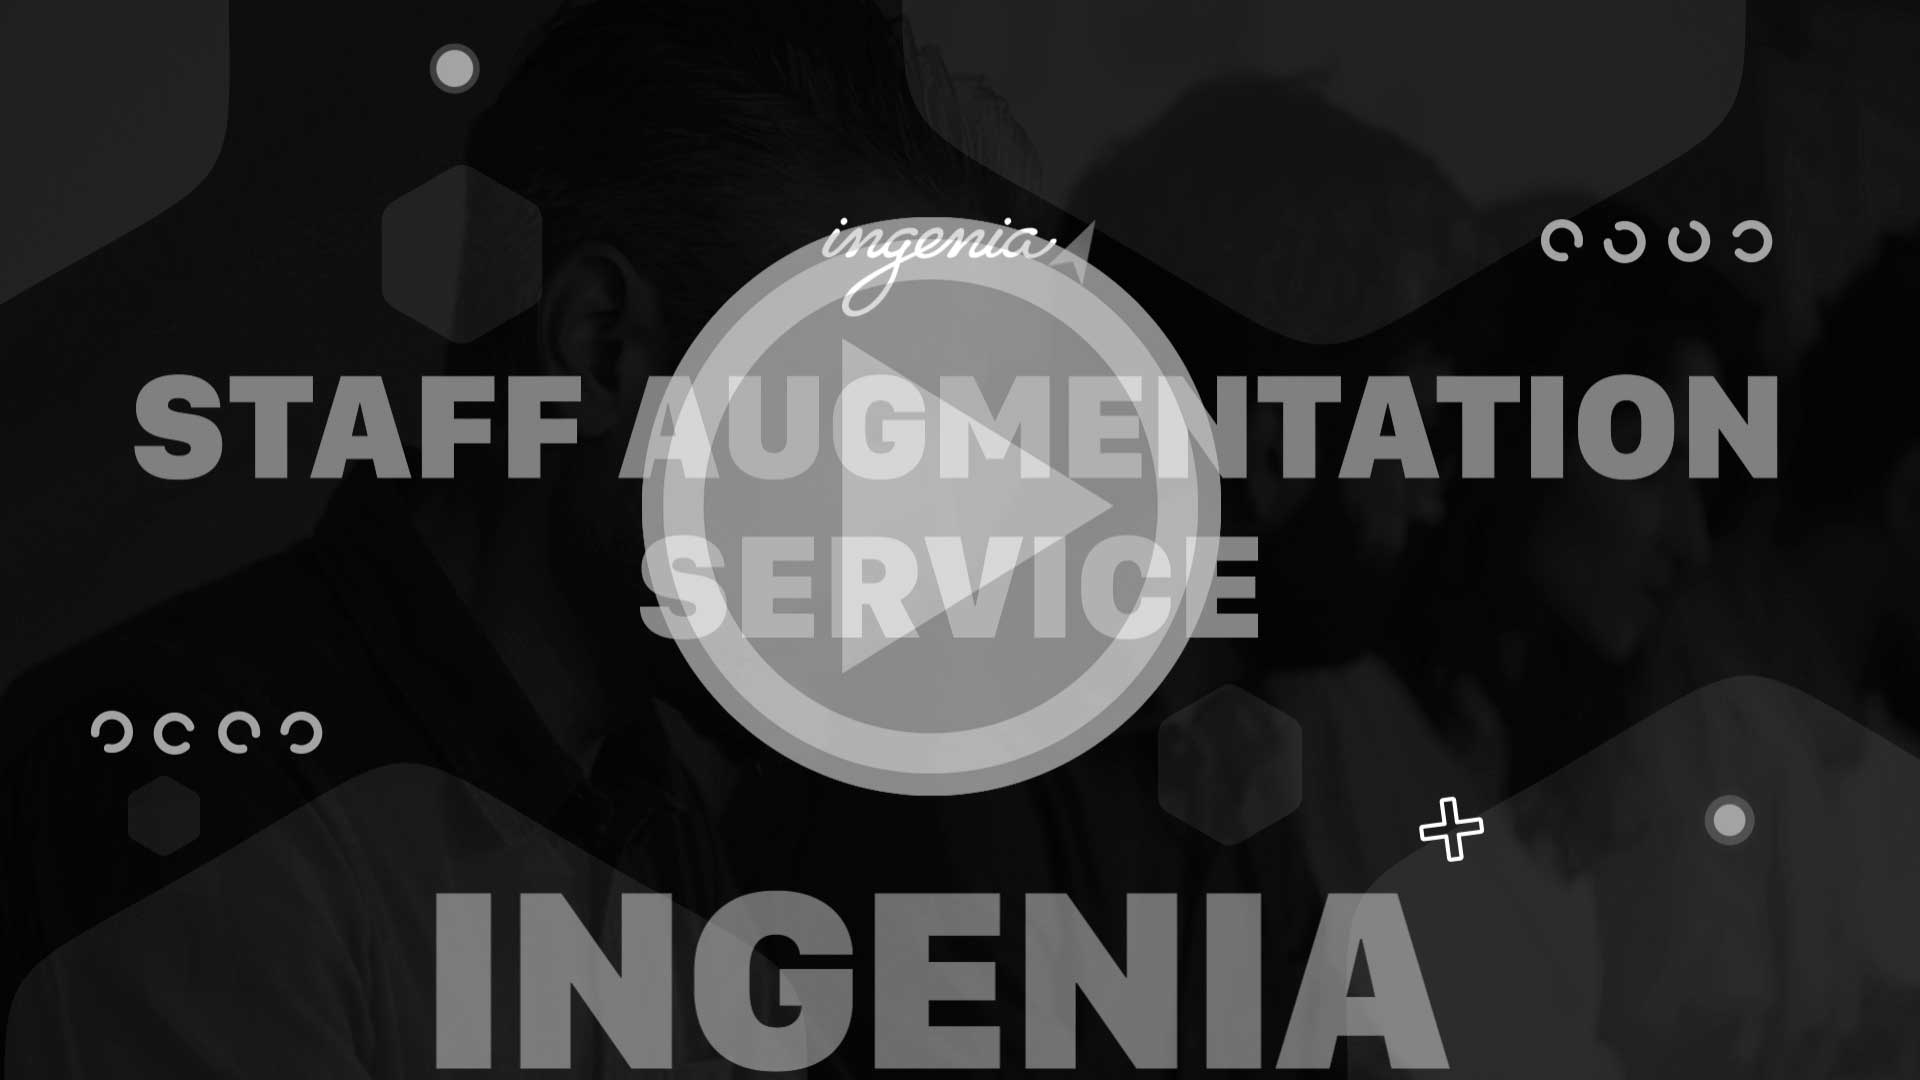 Ingenia - Staff Augmentation service